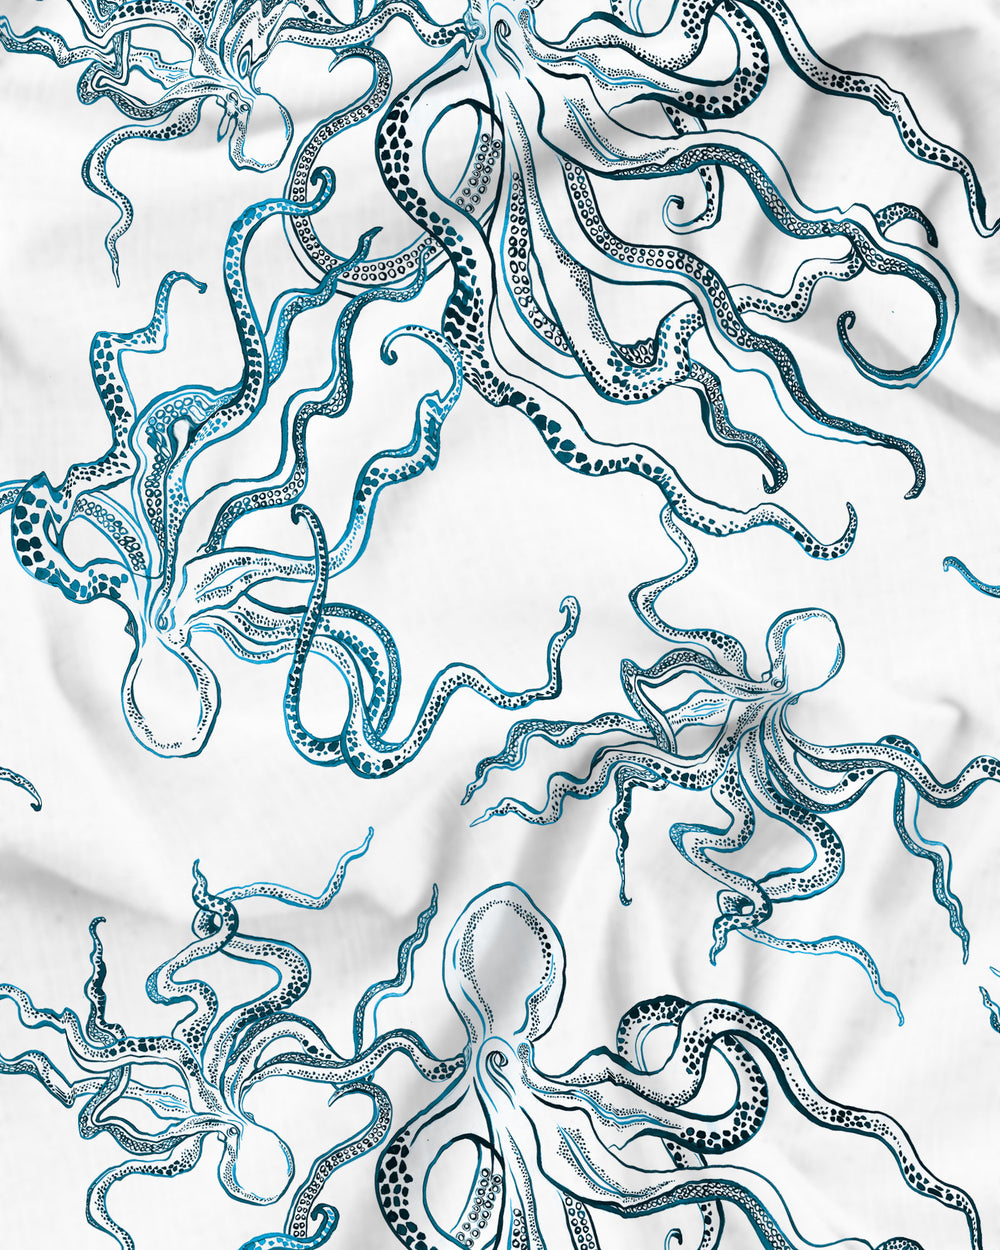 Octopus Indigo Pattern Detail - Woodstock Laundry